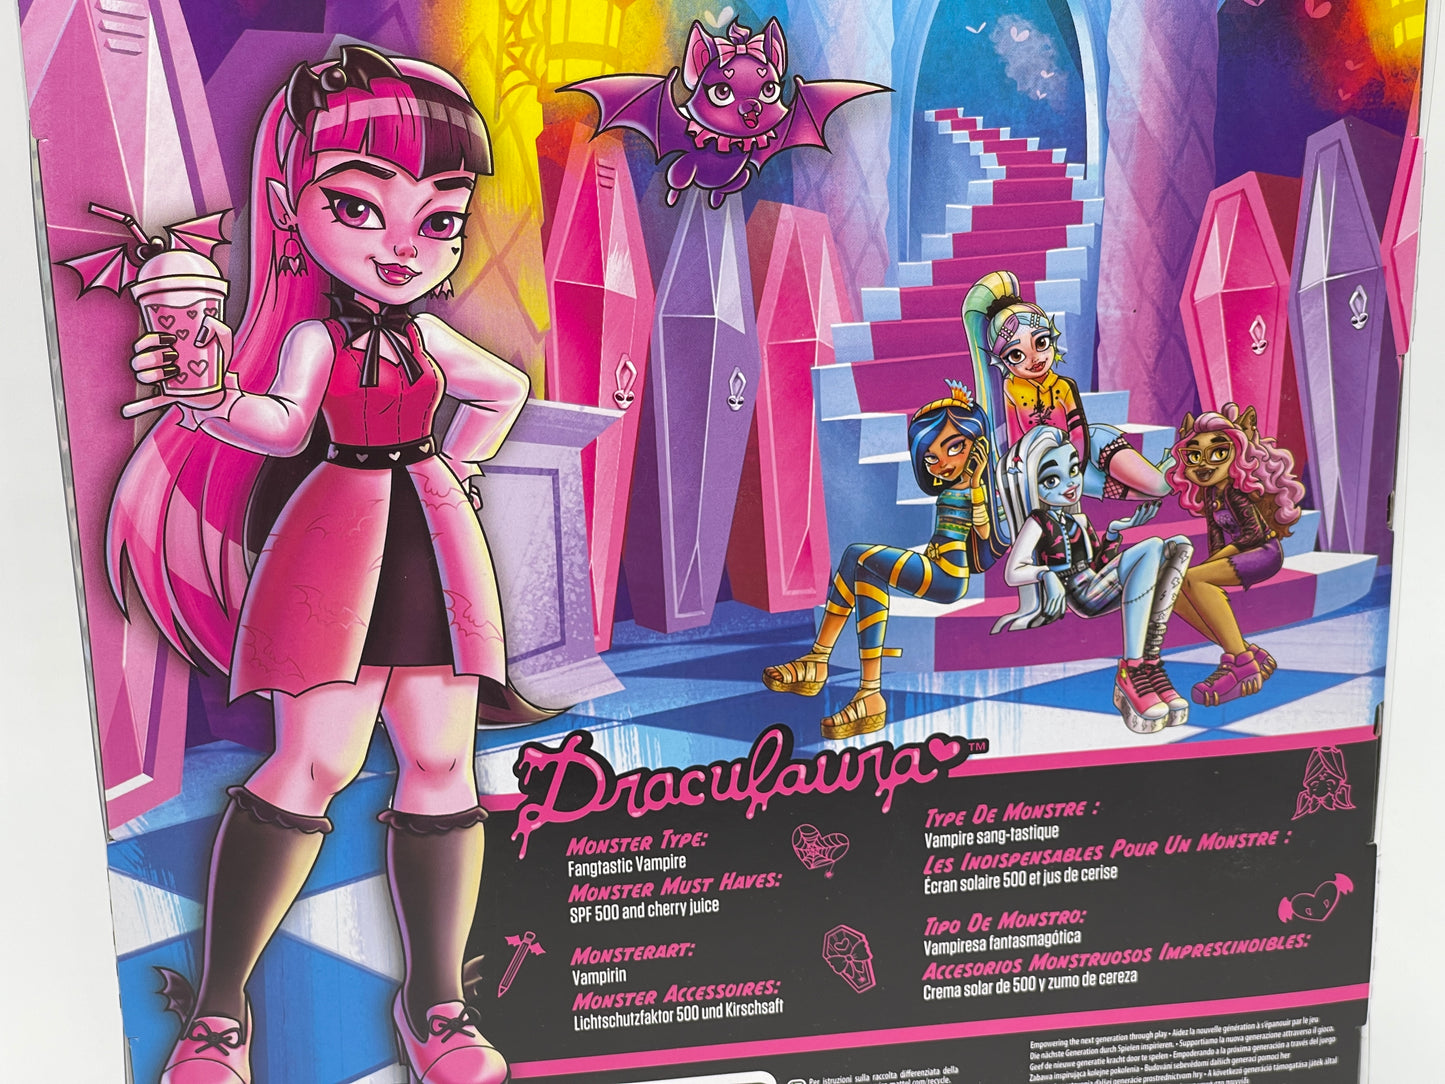 Monster High "Draculaura mit Count Fabulous" Reboot, Mattel (2022)